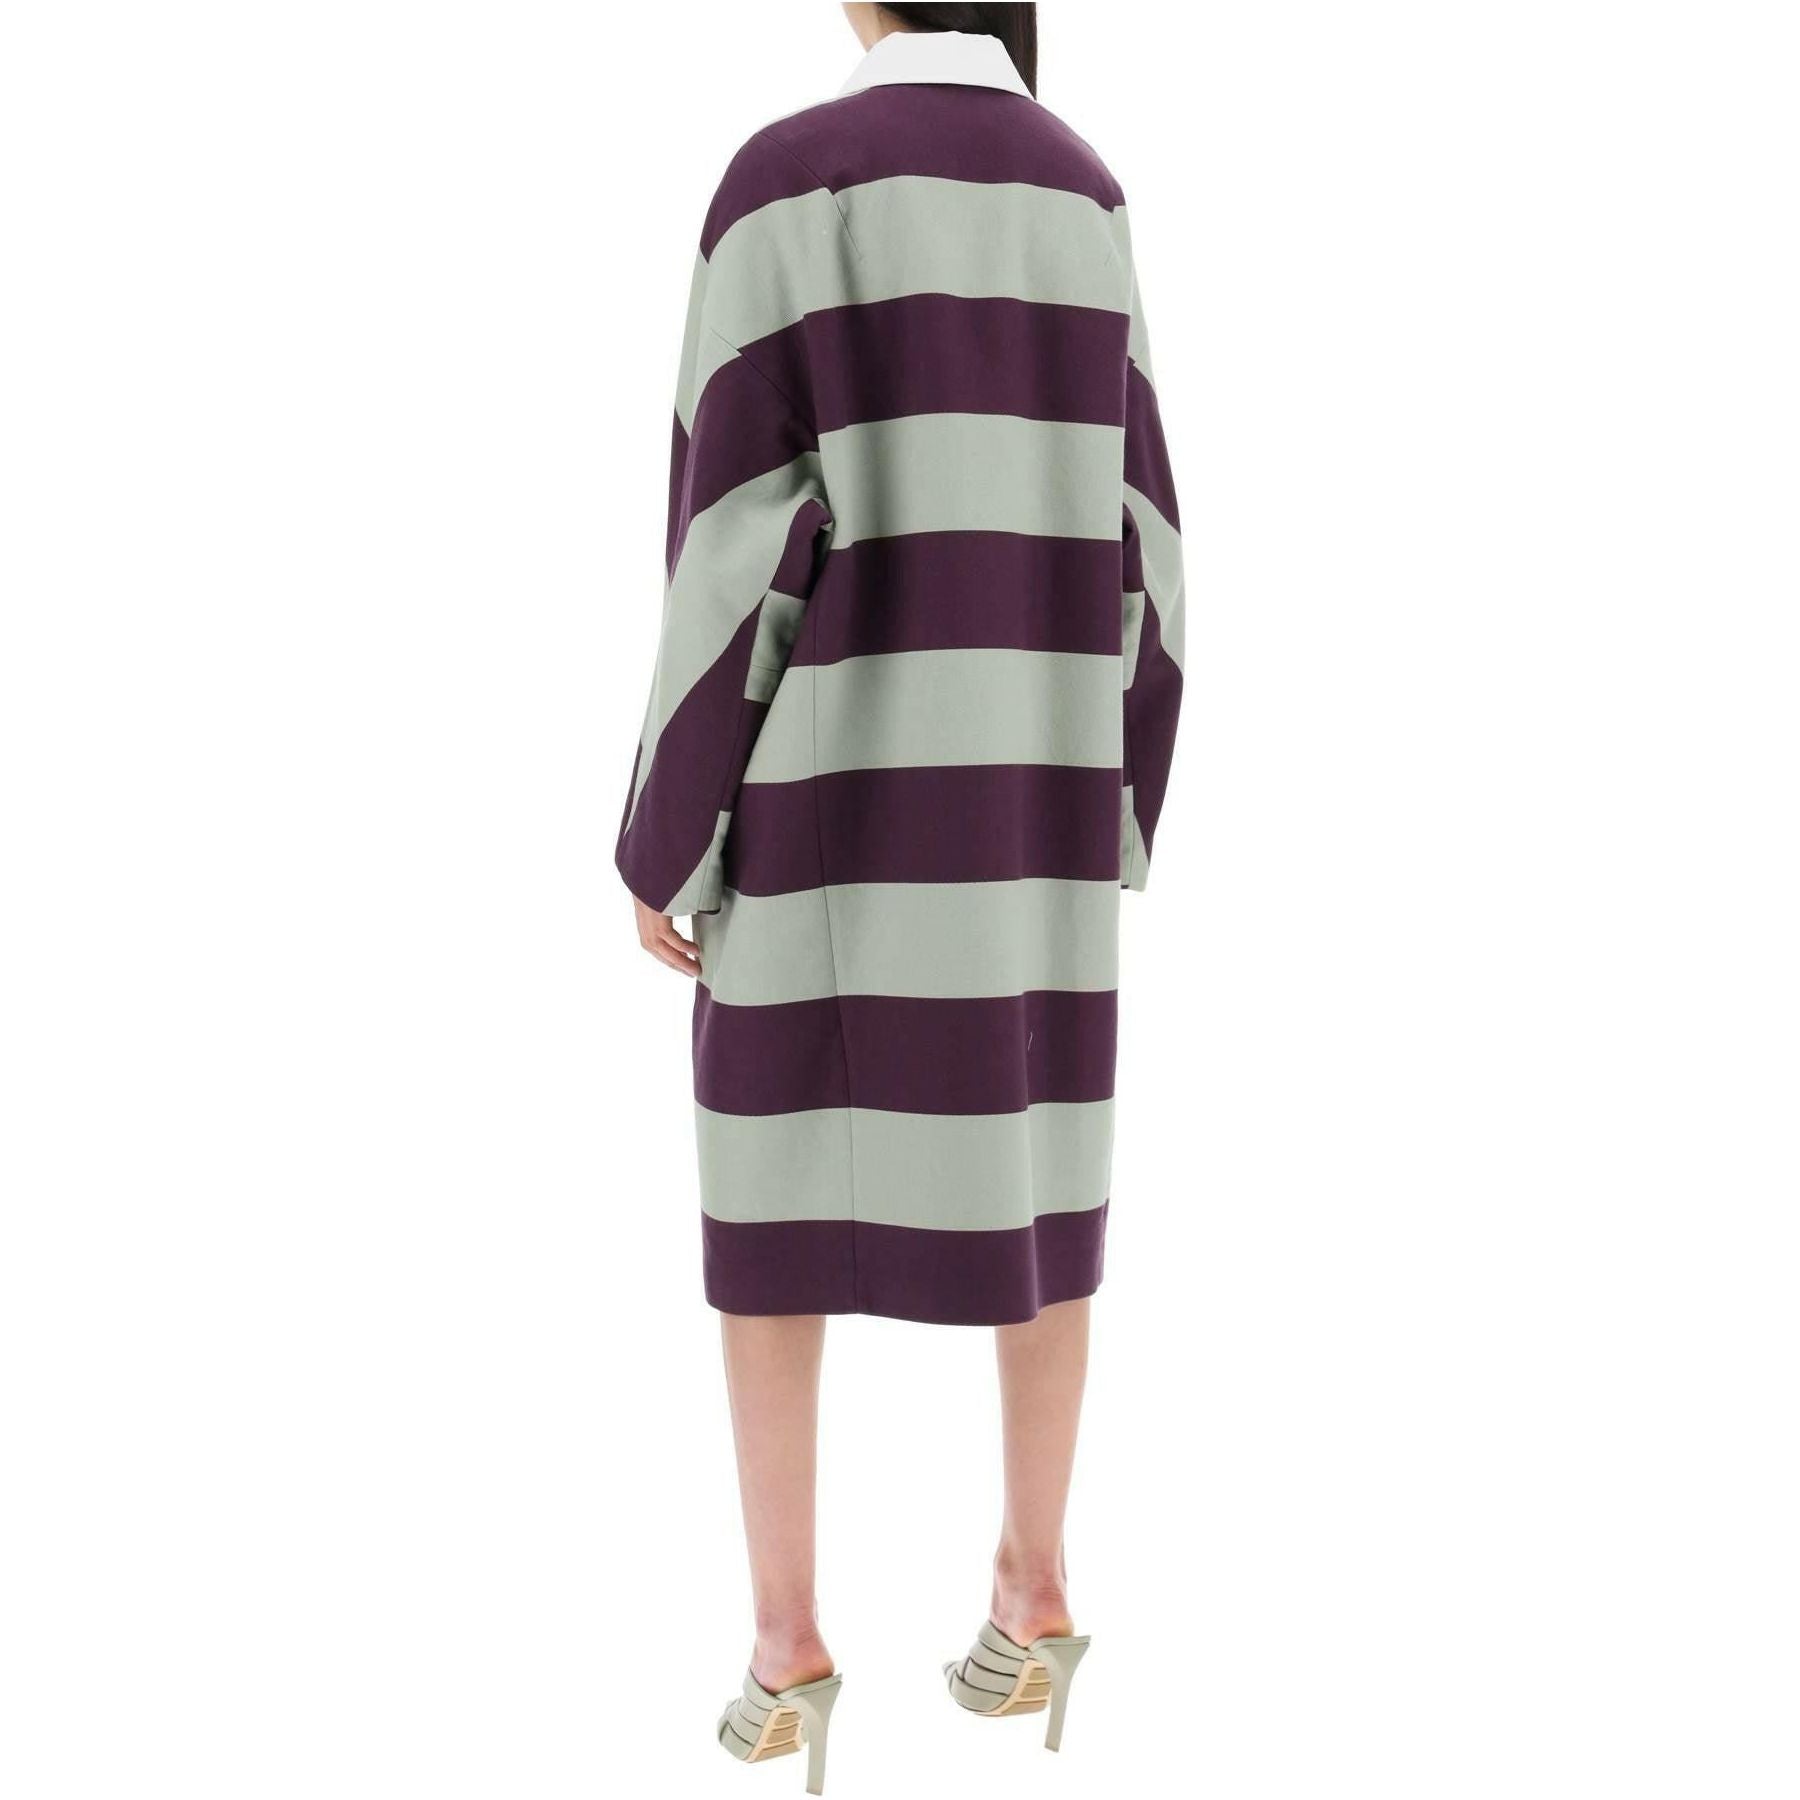 Auber Oversized Striped Cotton Kimono Coat with Contrast Collar DRIES VAN NOTEN JOHN JULIA.